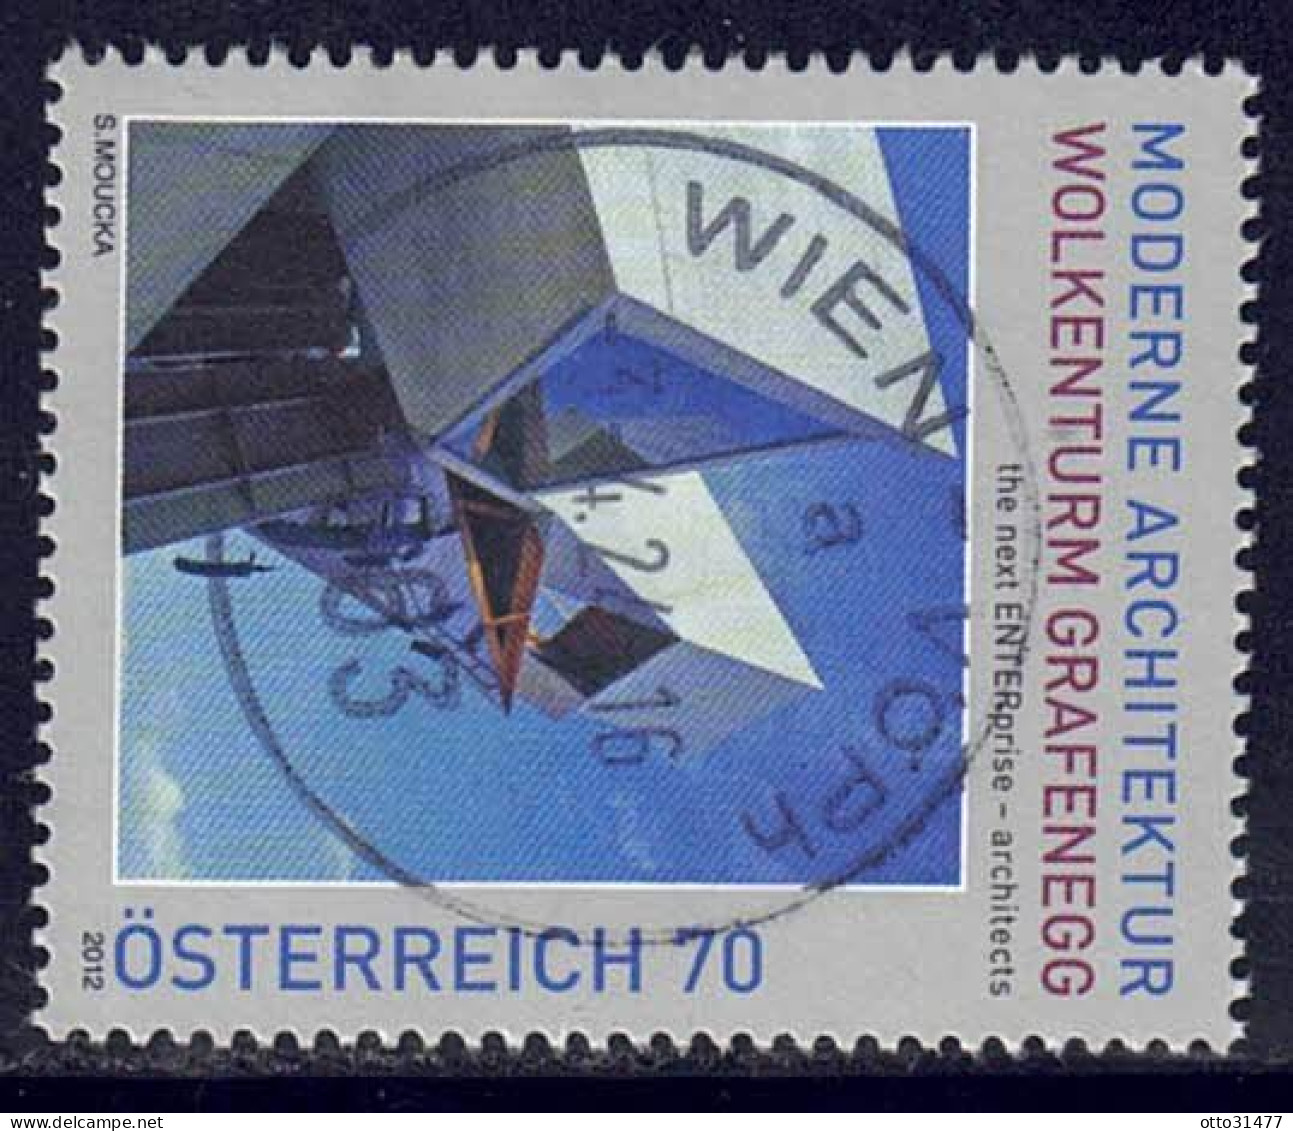 Österreich 2012 - Architektur, MiNr. 3008, Gestempelt / Used - Used Stamps